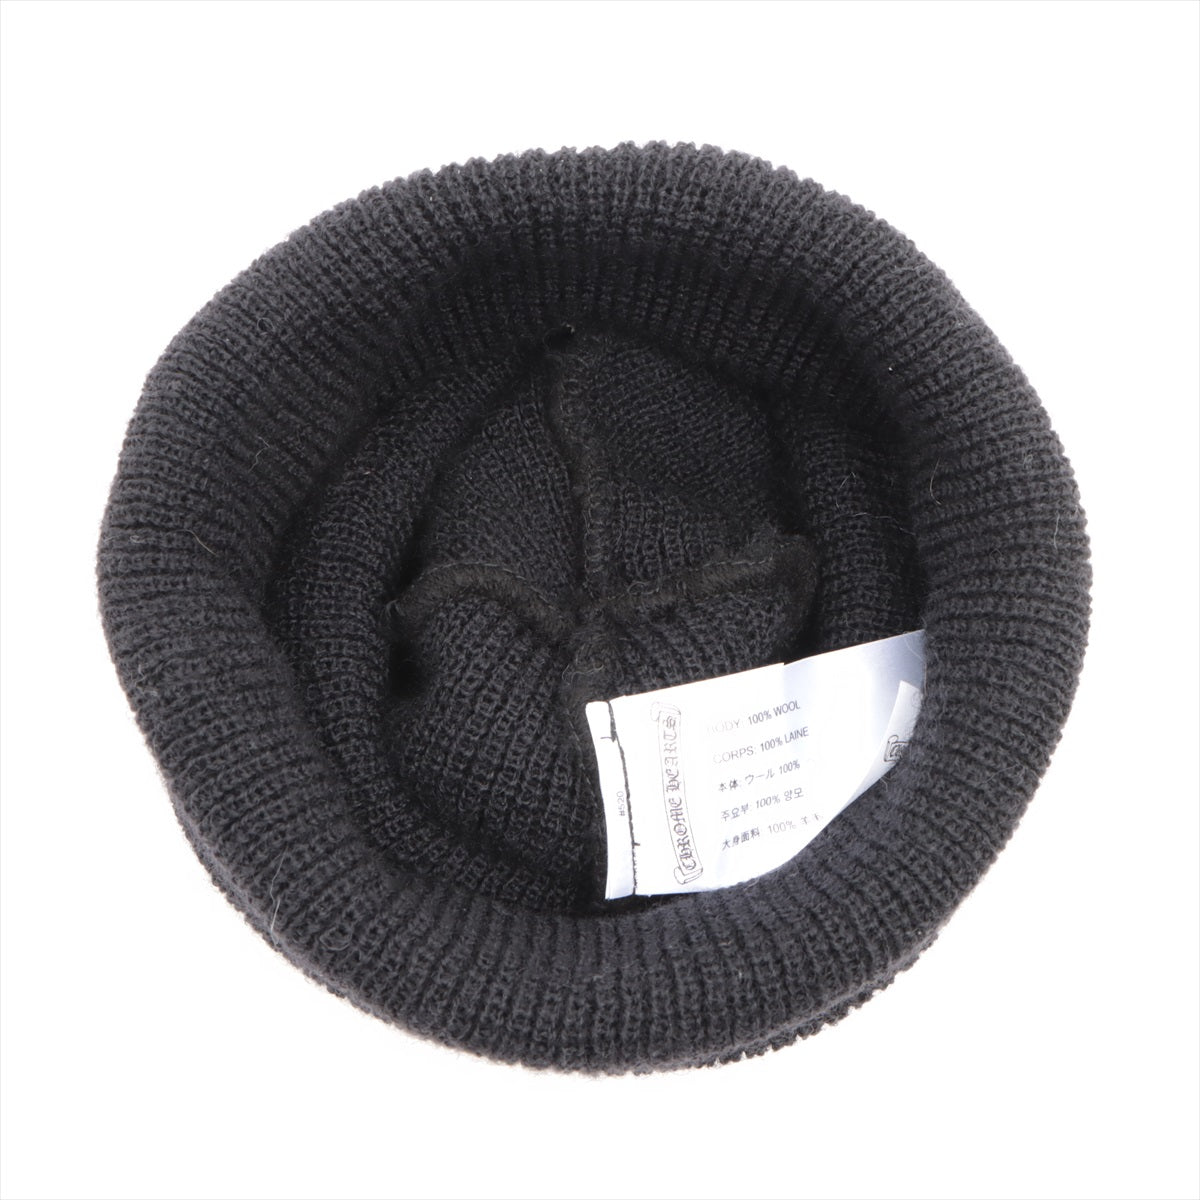 Chrome Hearts Horse Shoe Beanie Wool ONE SIZE 23cm Black Knit hat